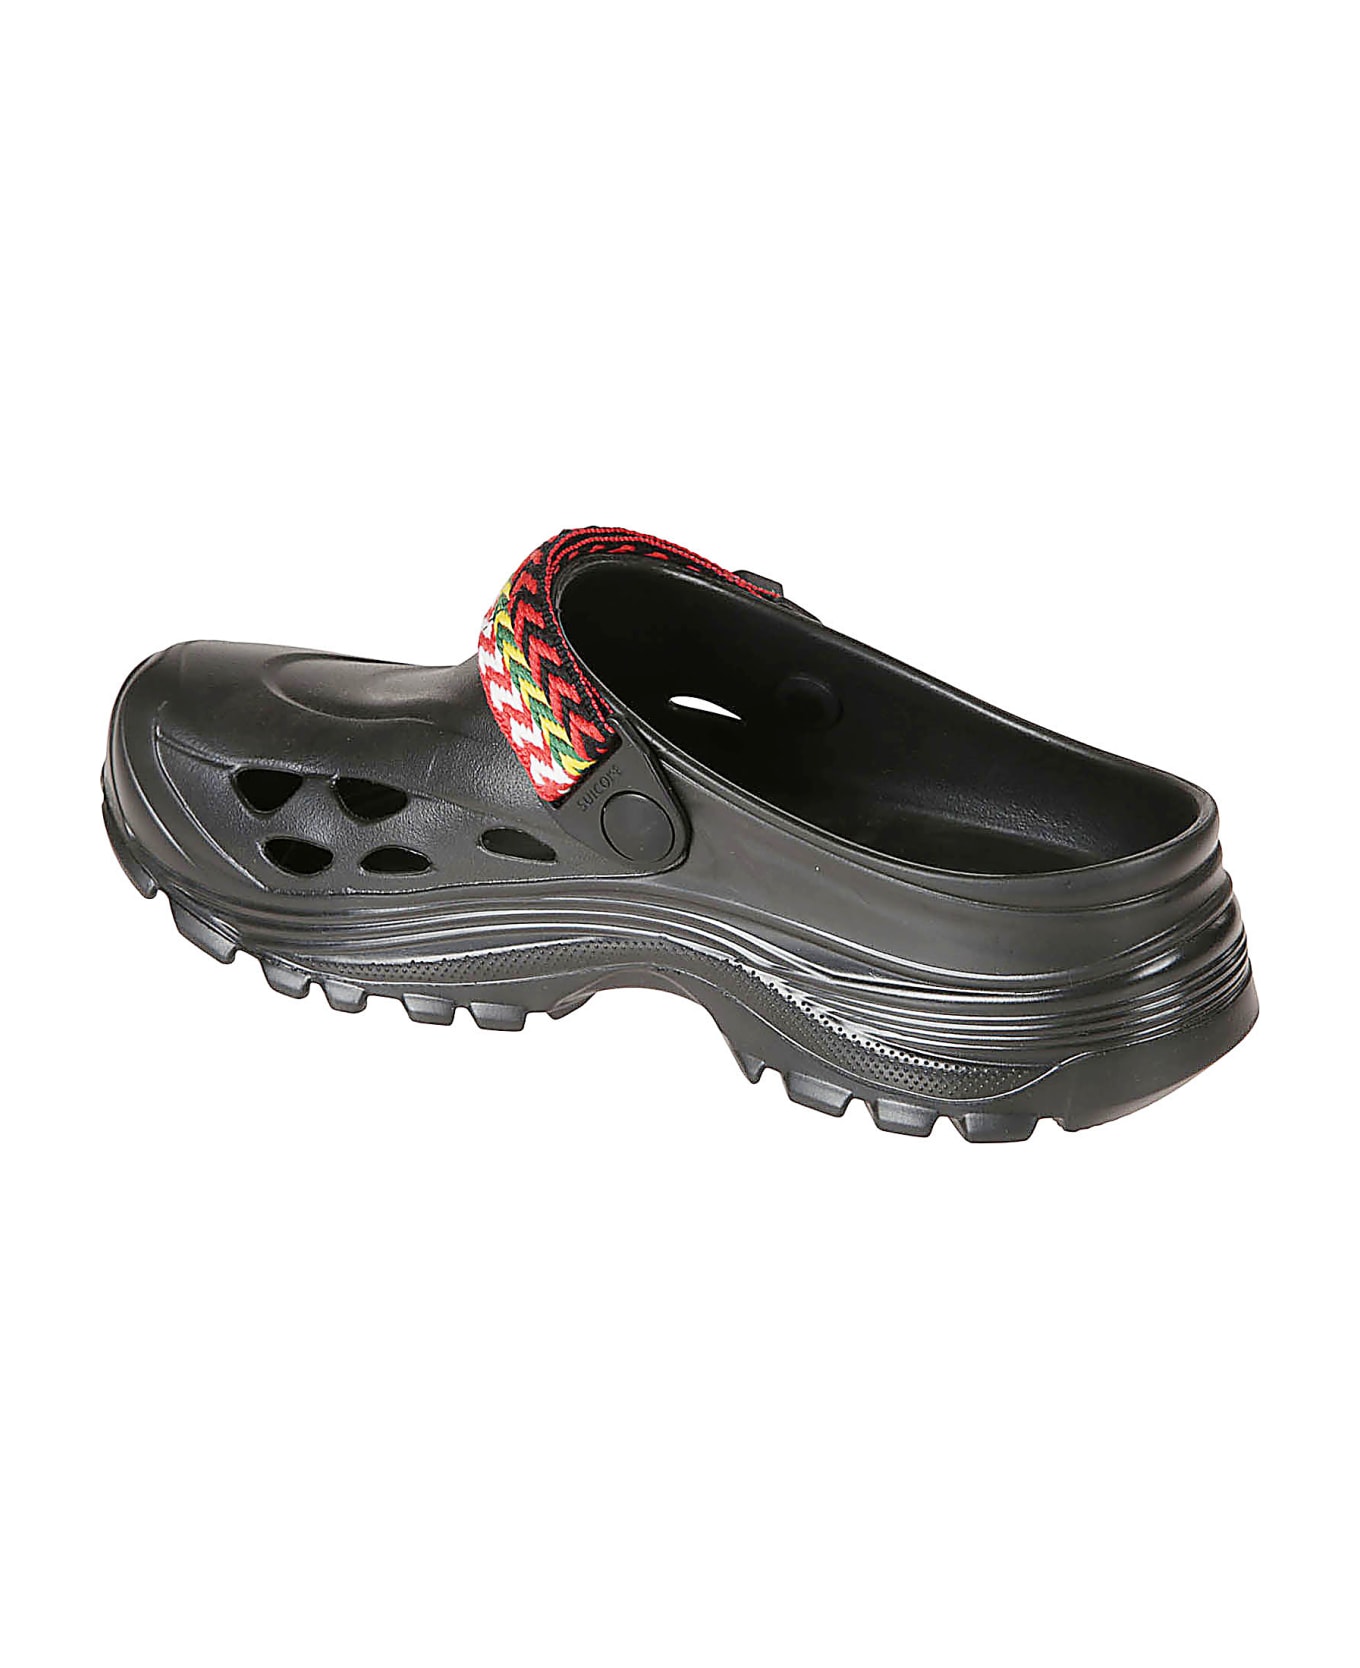 Lanvin Mok Curb Clogs Sandals - Black